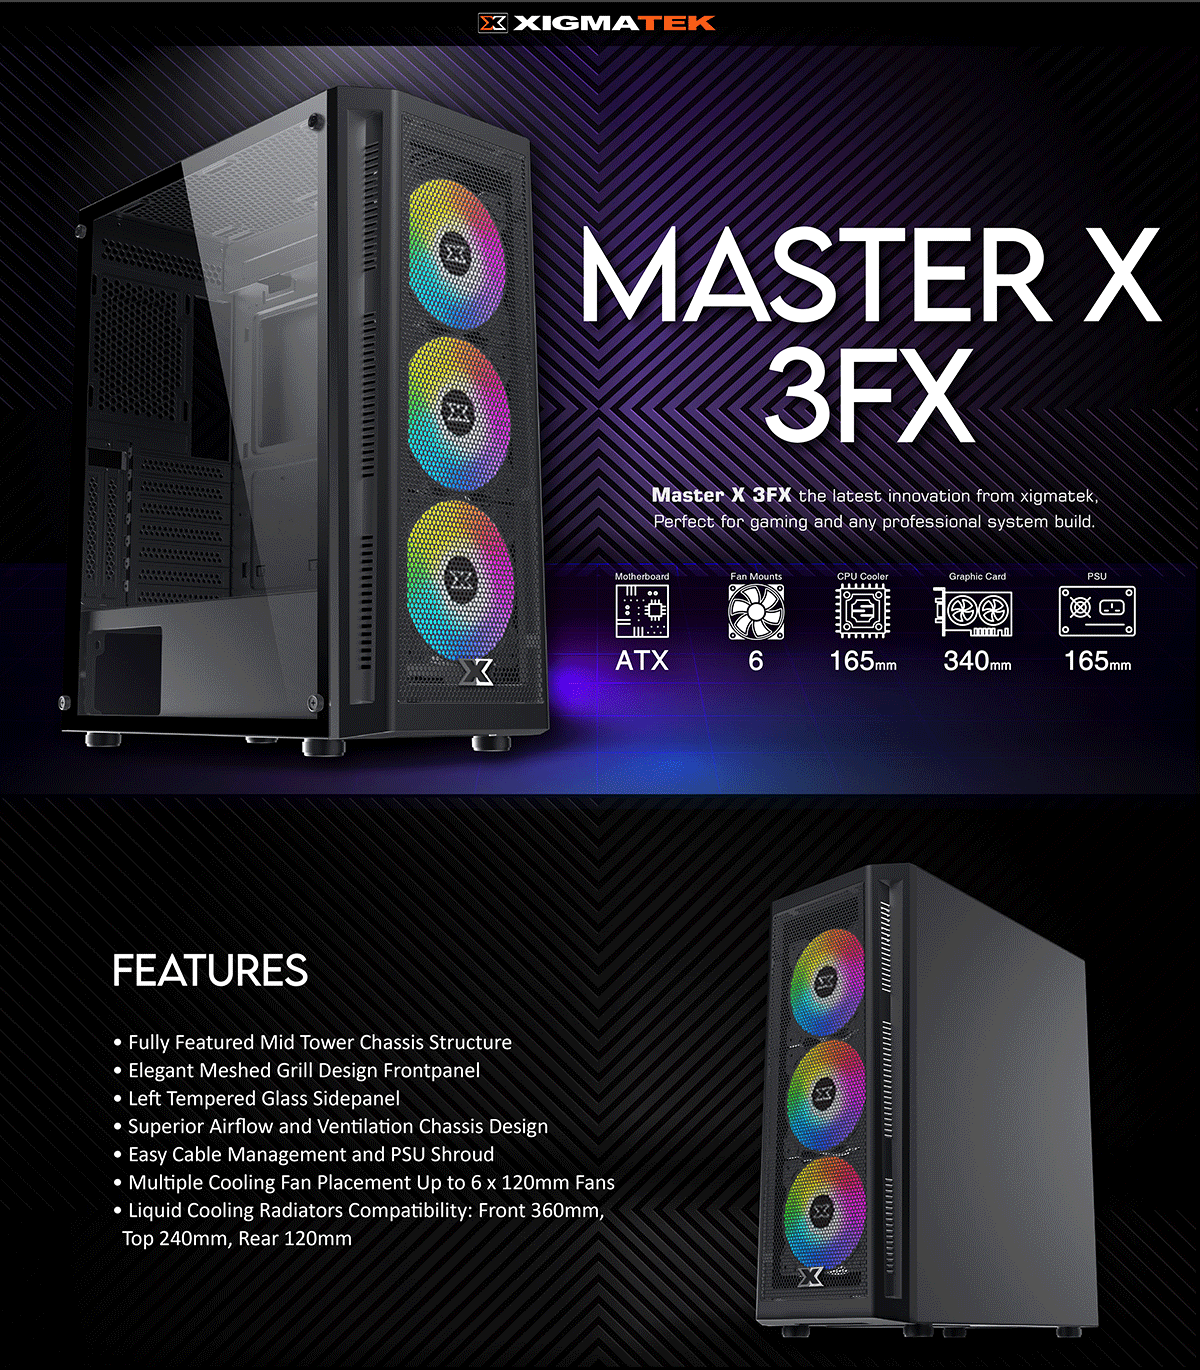 Tính năng vượt trội của vỏ Case Xigmatek Master X 3FX